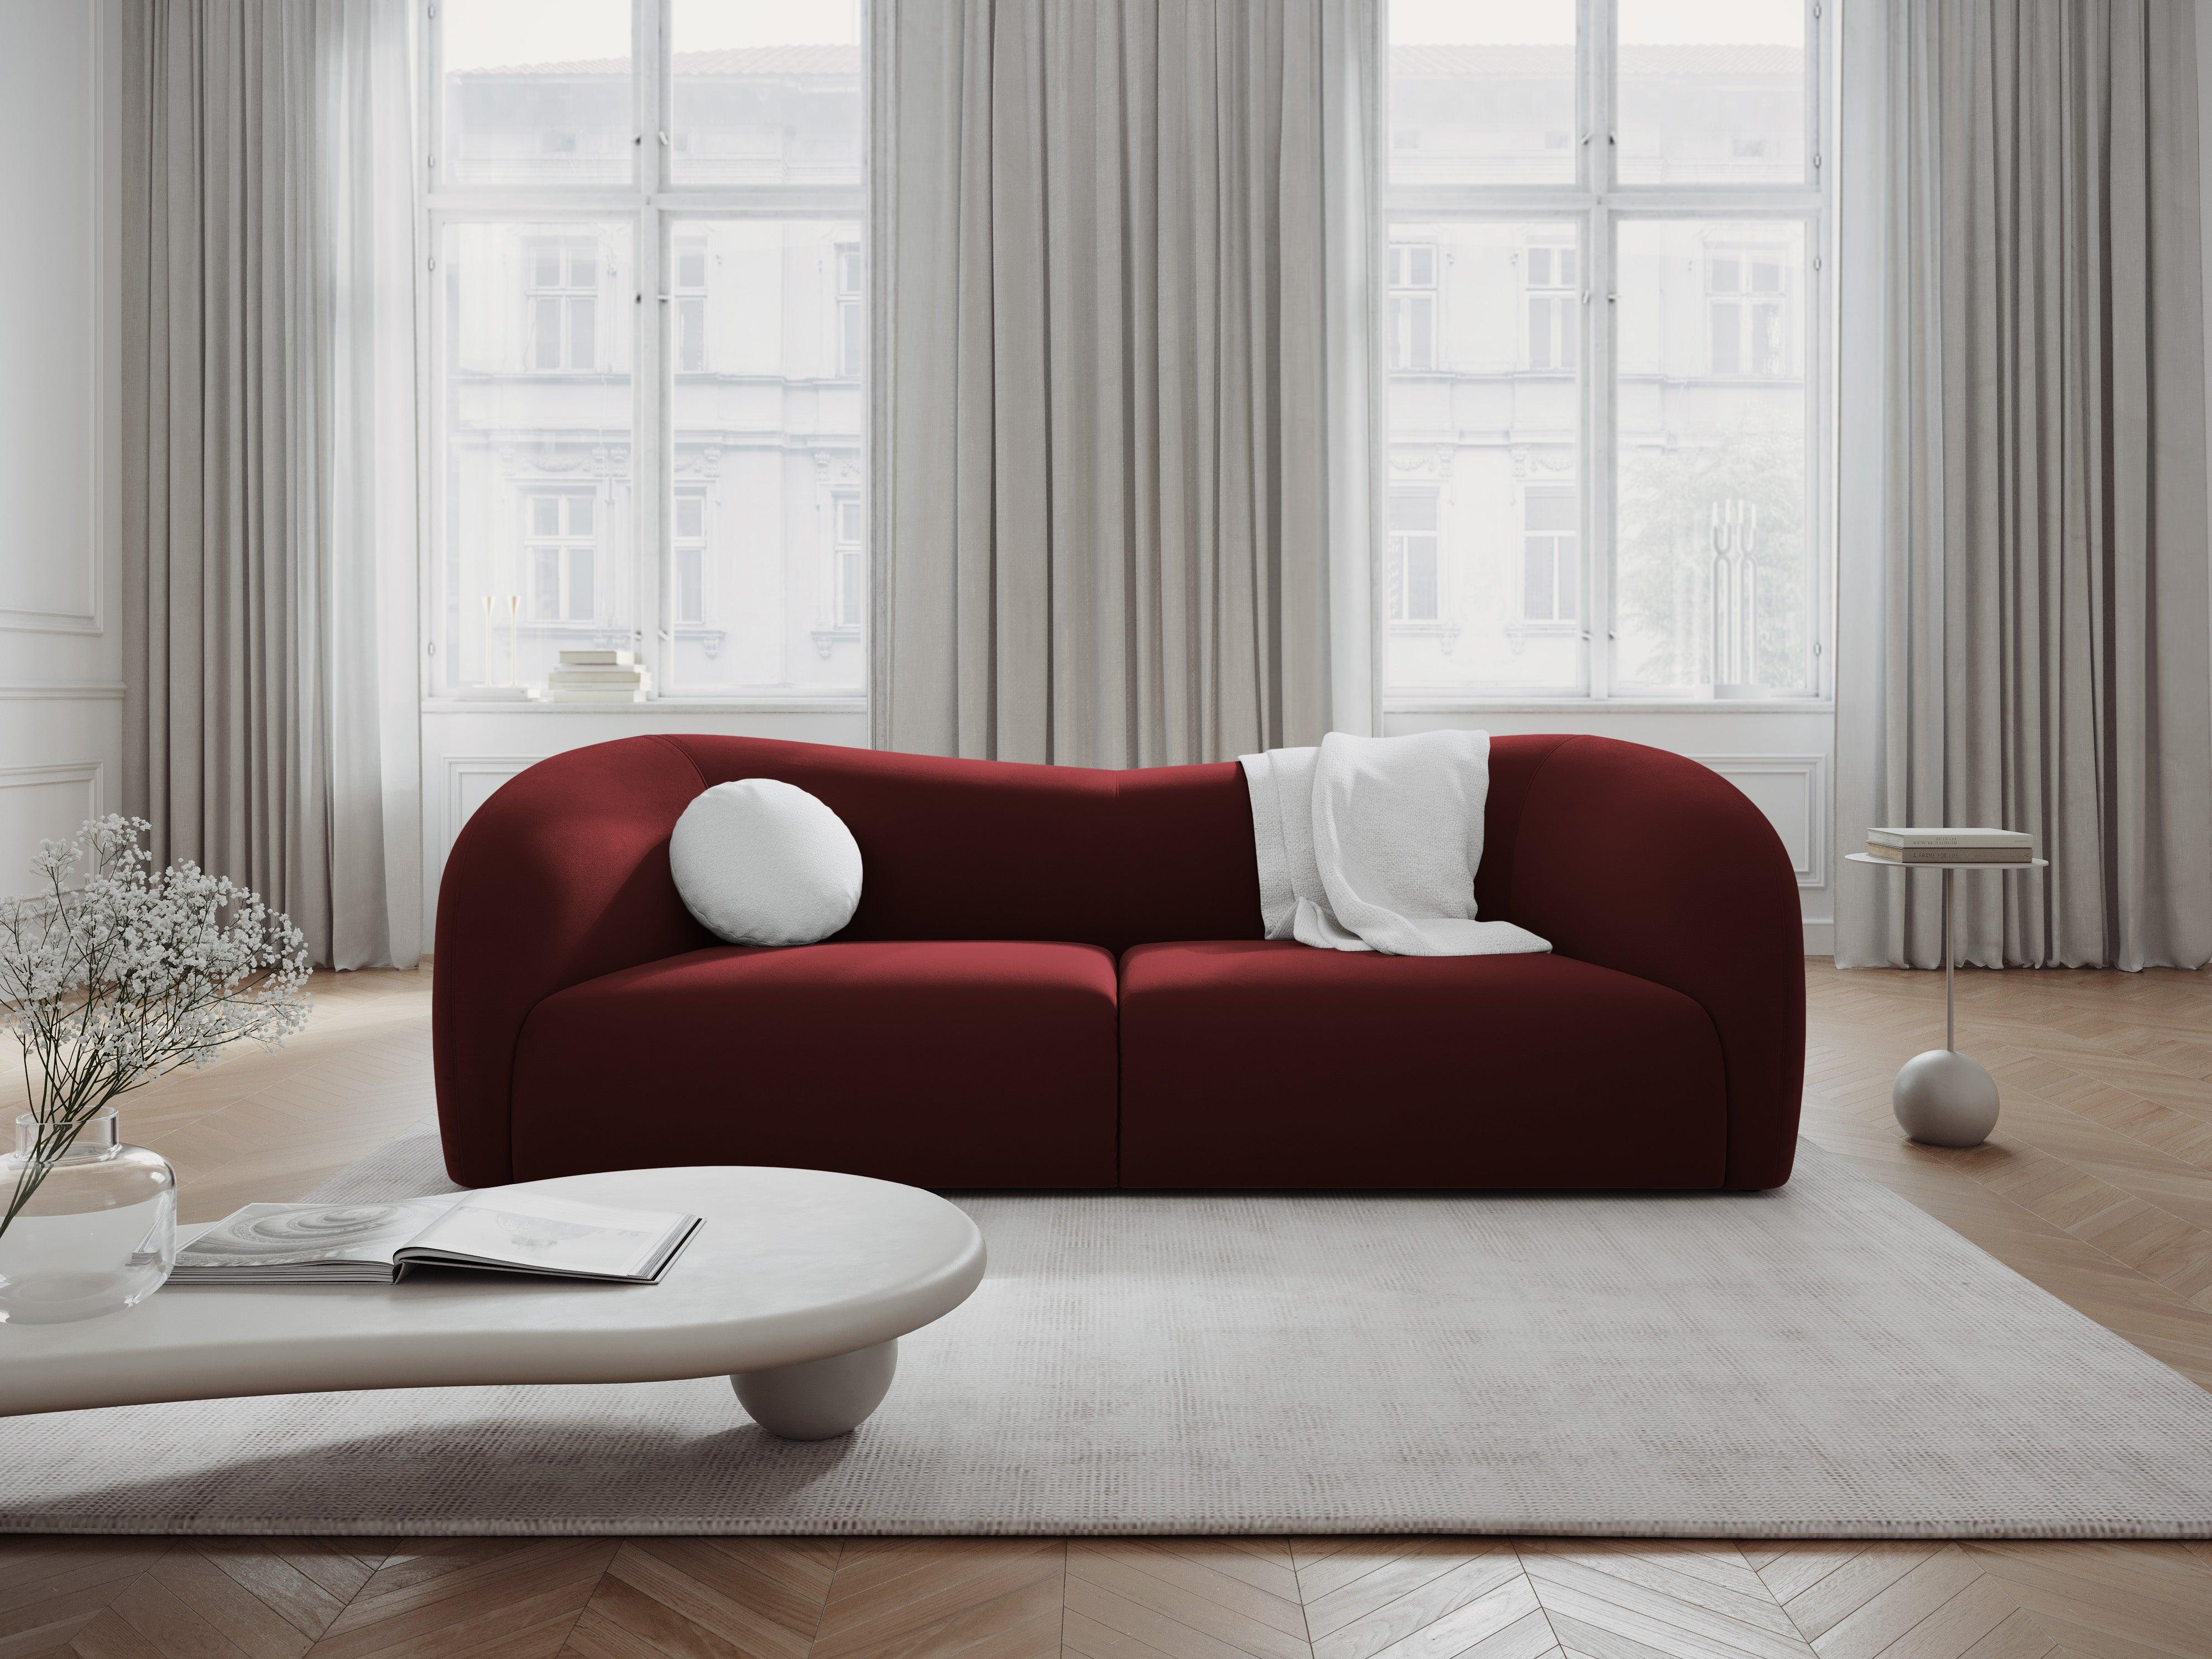 Velvet Sofa, "Santi", 3 Seats, Dark Red, 237x90x75
Made in Europe Interieurs 86    Eye on Design